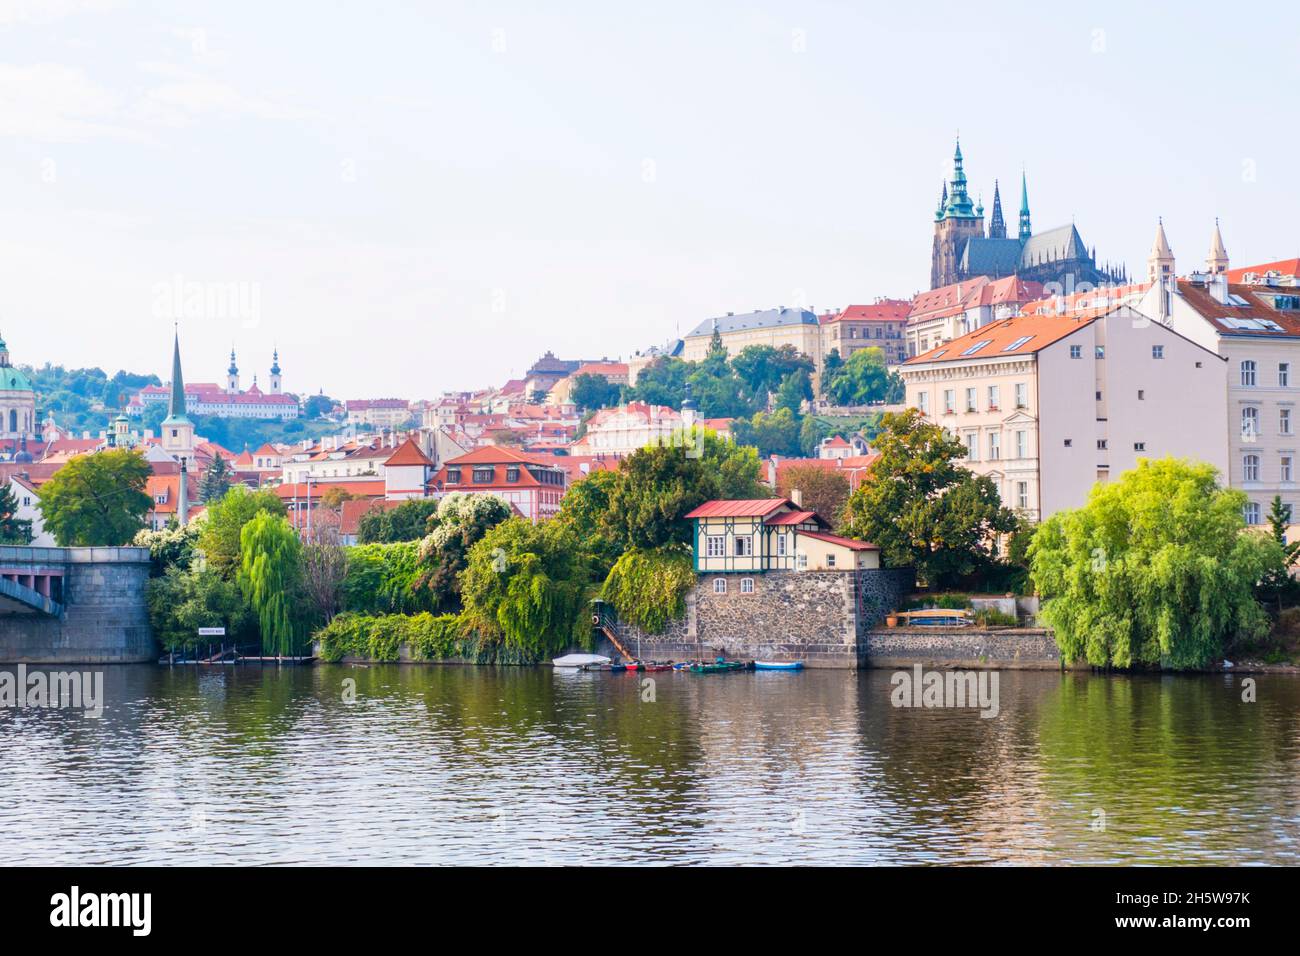 Mala strana, Hradcany, Strahov, riverside Vltava, Prague, Czech Republic Stock Photo